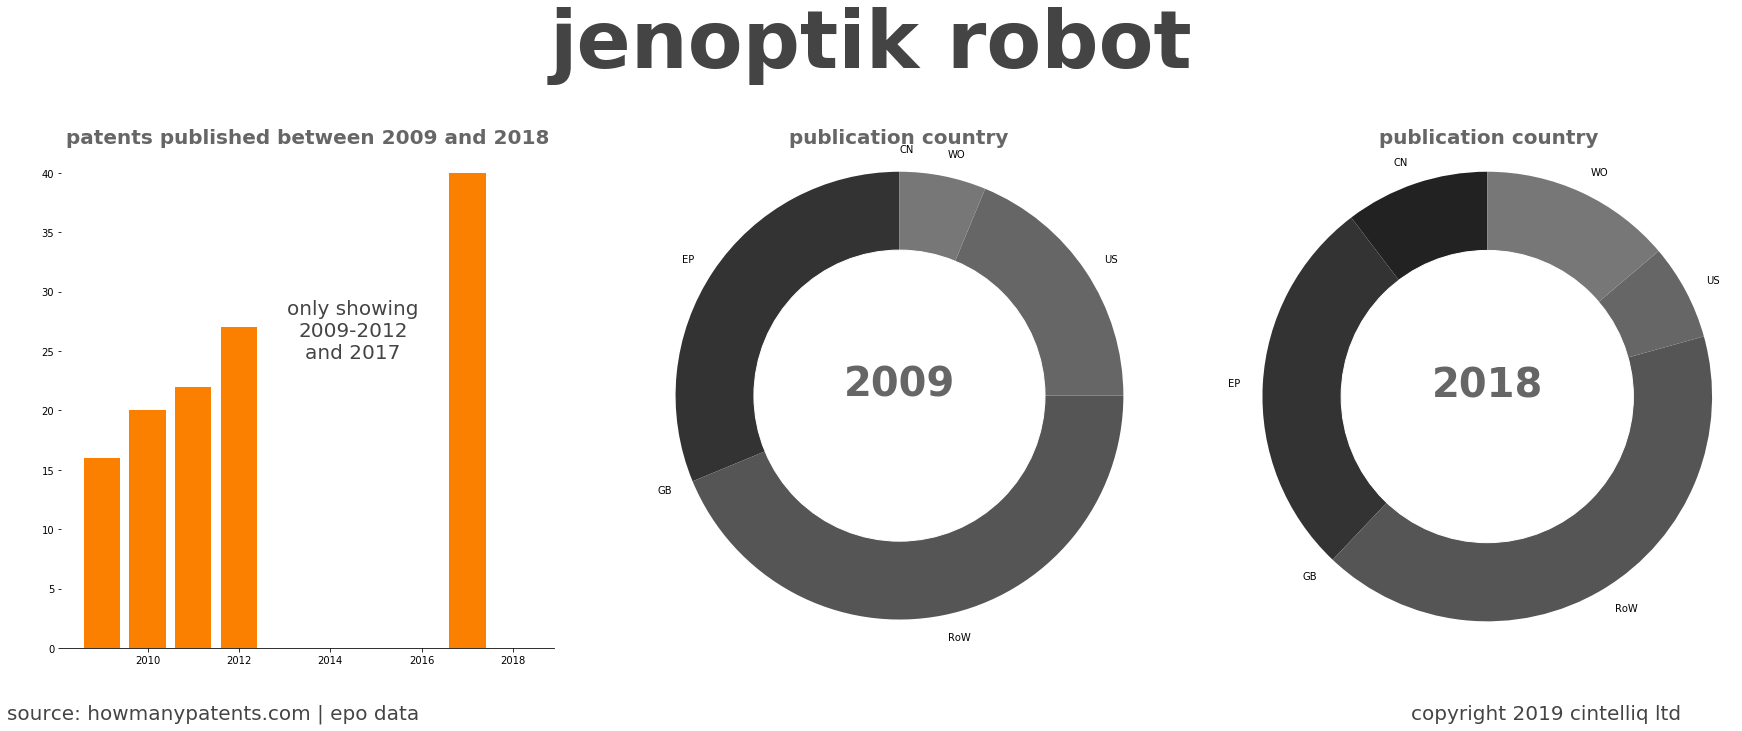 summary of patents for Jenoptik Robot